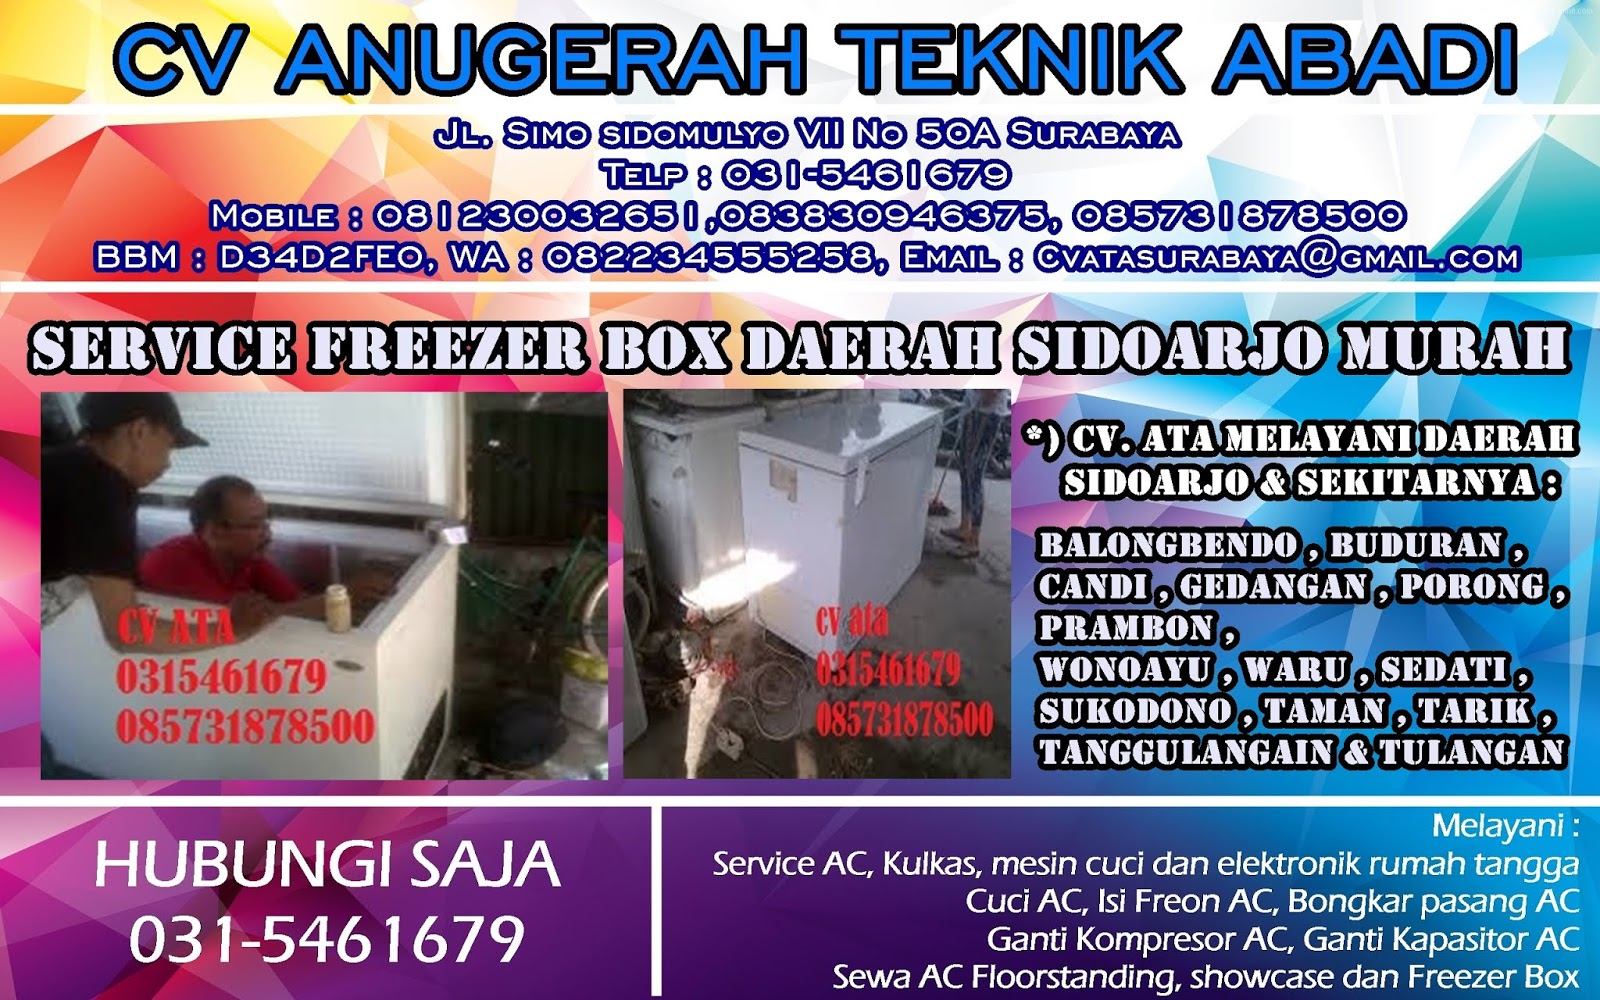  Service Freezer Surabaya gedangan sidoarjo gresik 